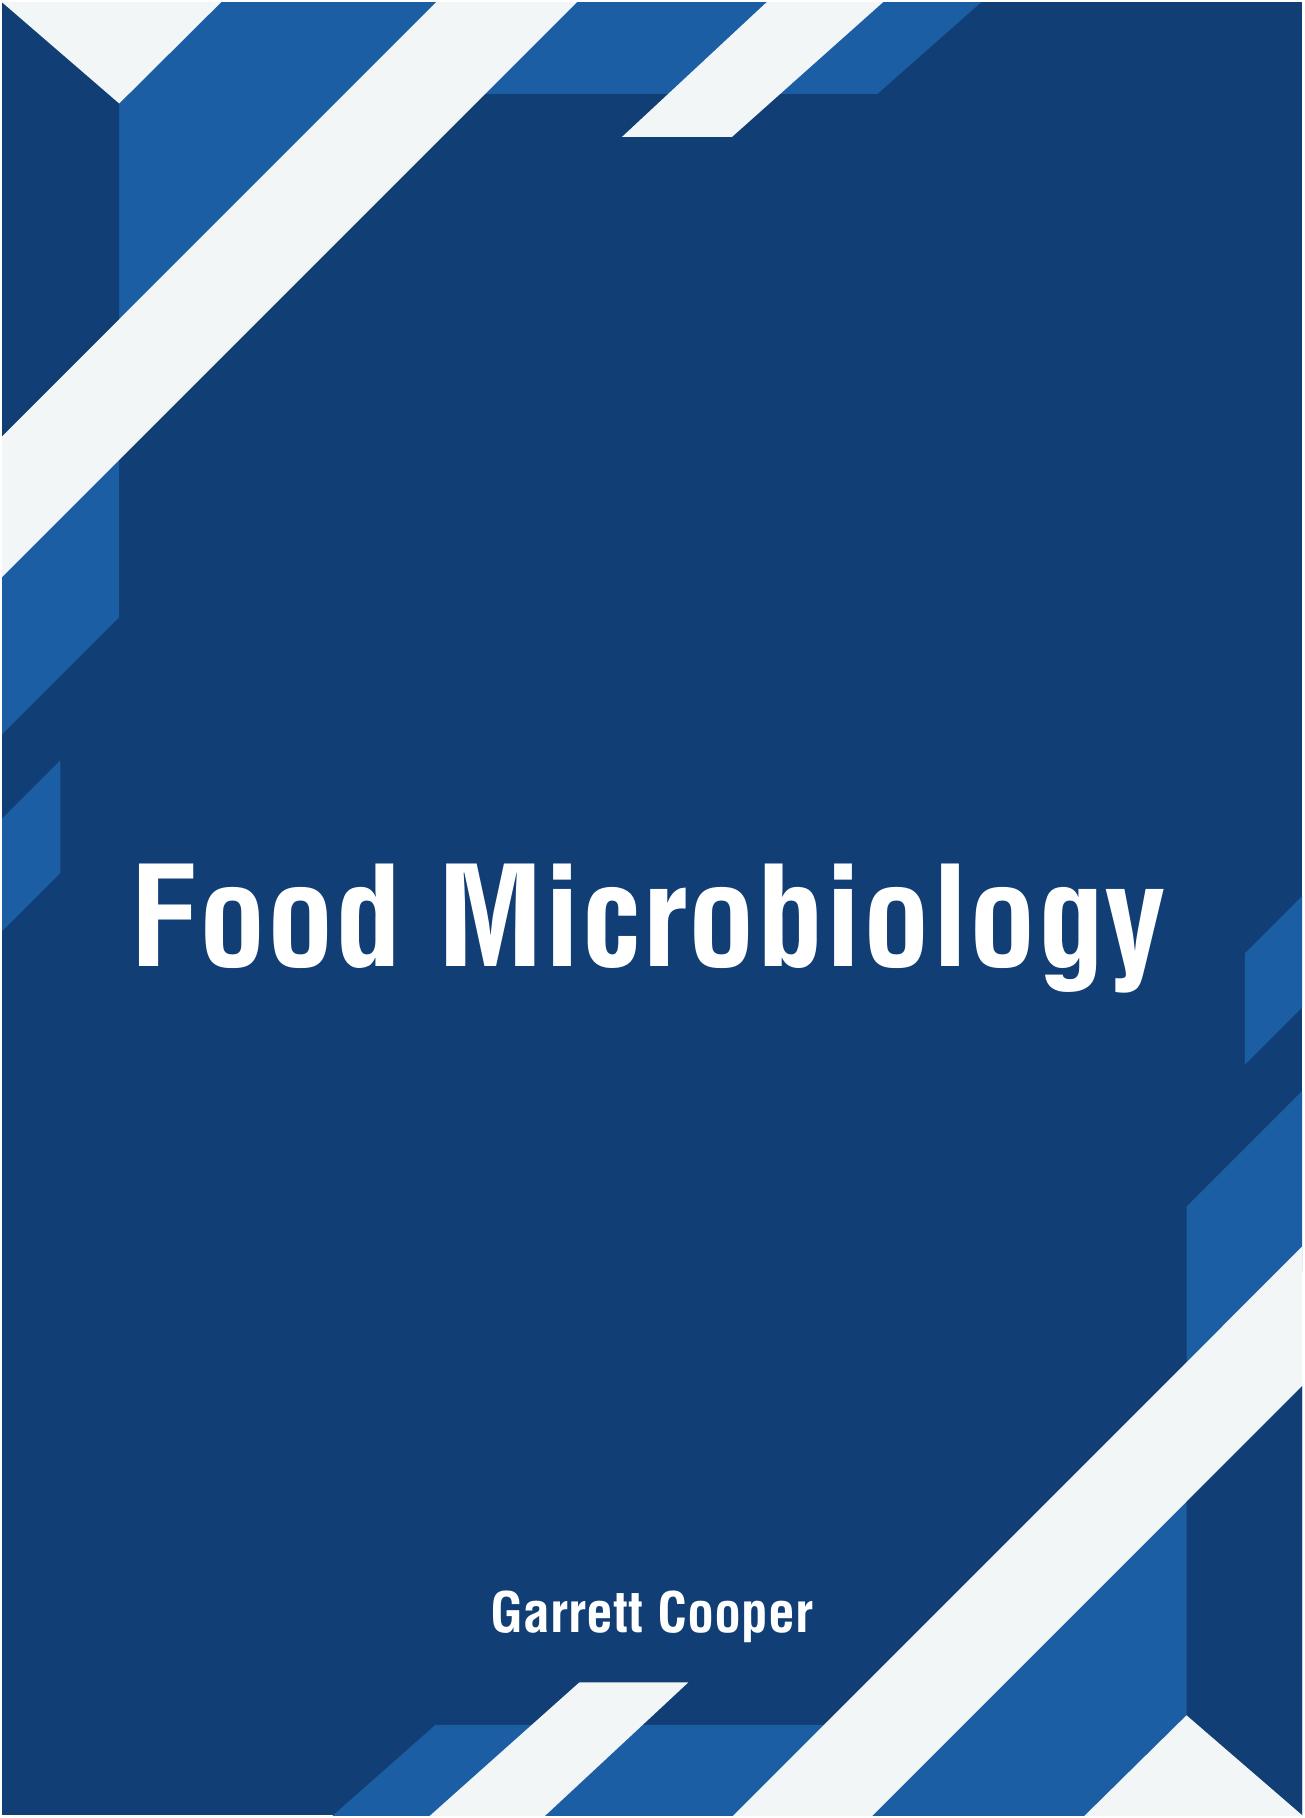 Food Microbiology 2018